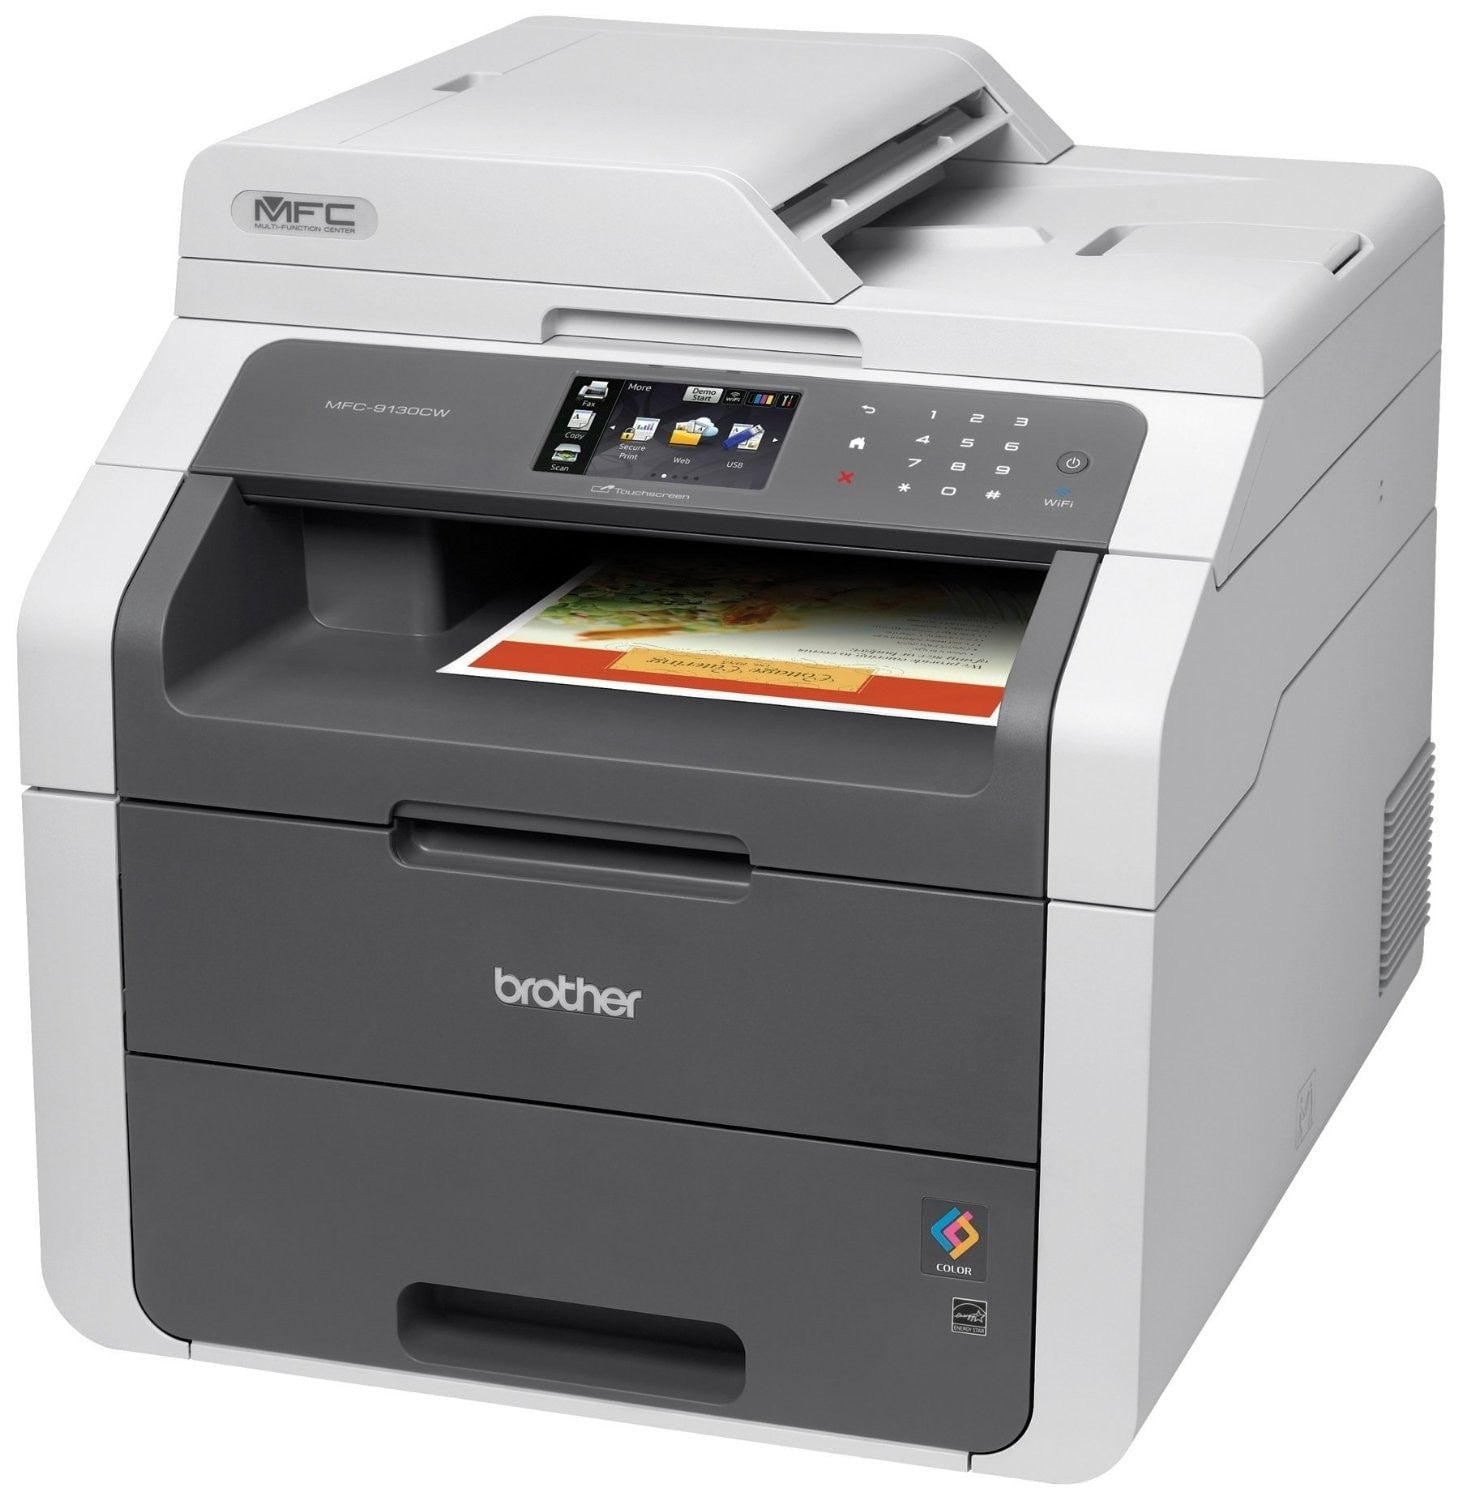 Absolute Toner REPOSSESSED Brother MFC-9130CW Colour Laser Printer Laser Printer